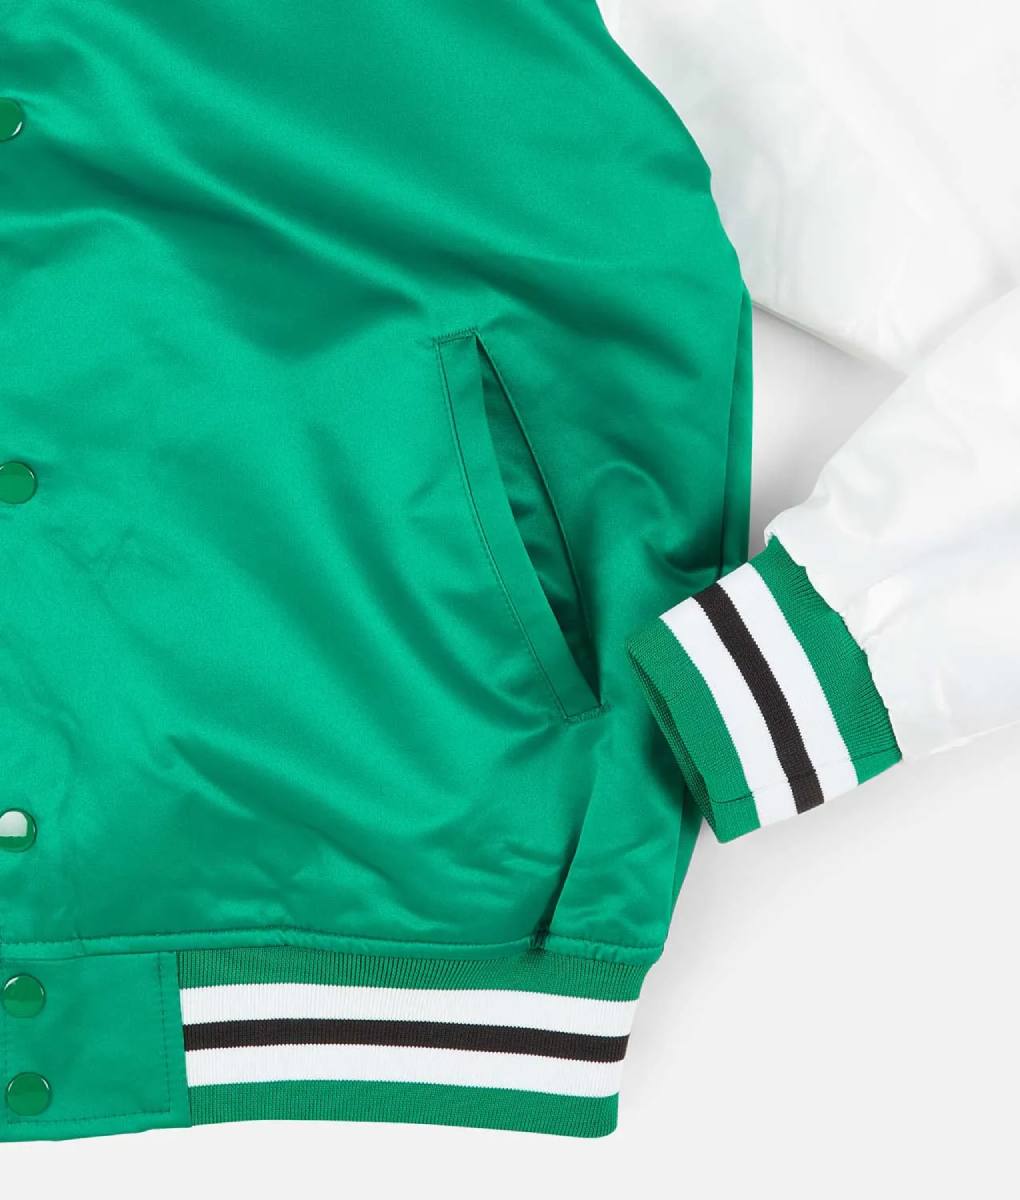 Boston Celtics Green and White Jacket (3)